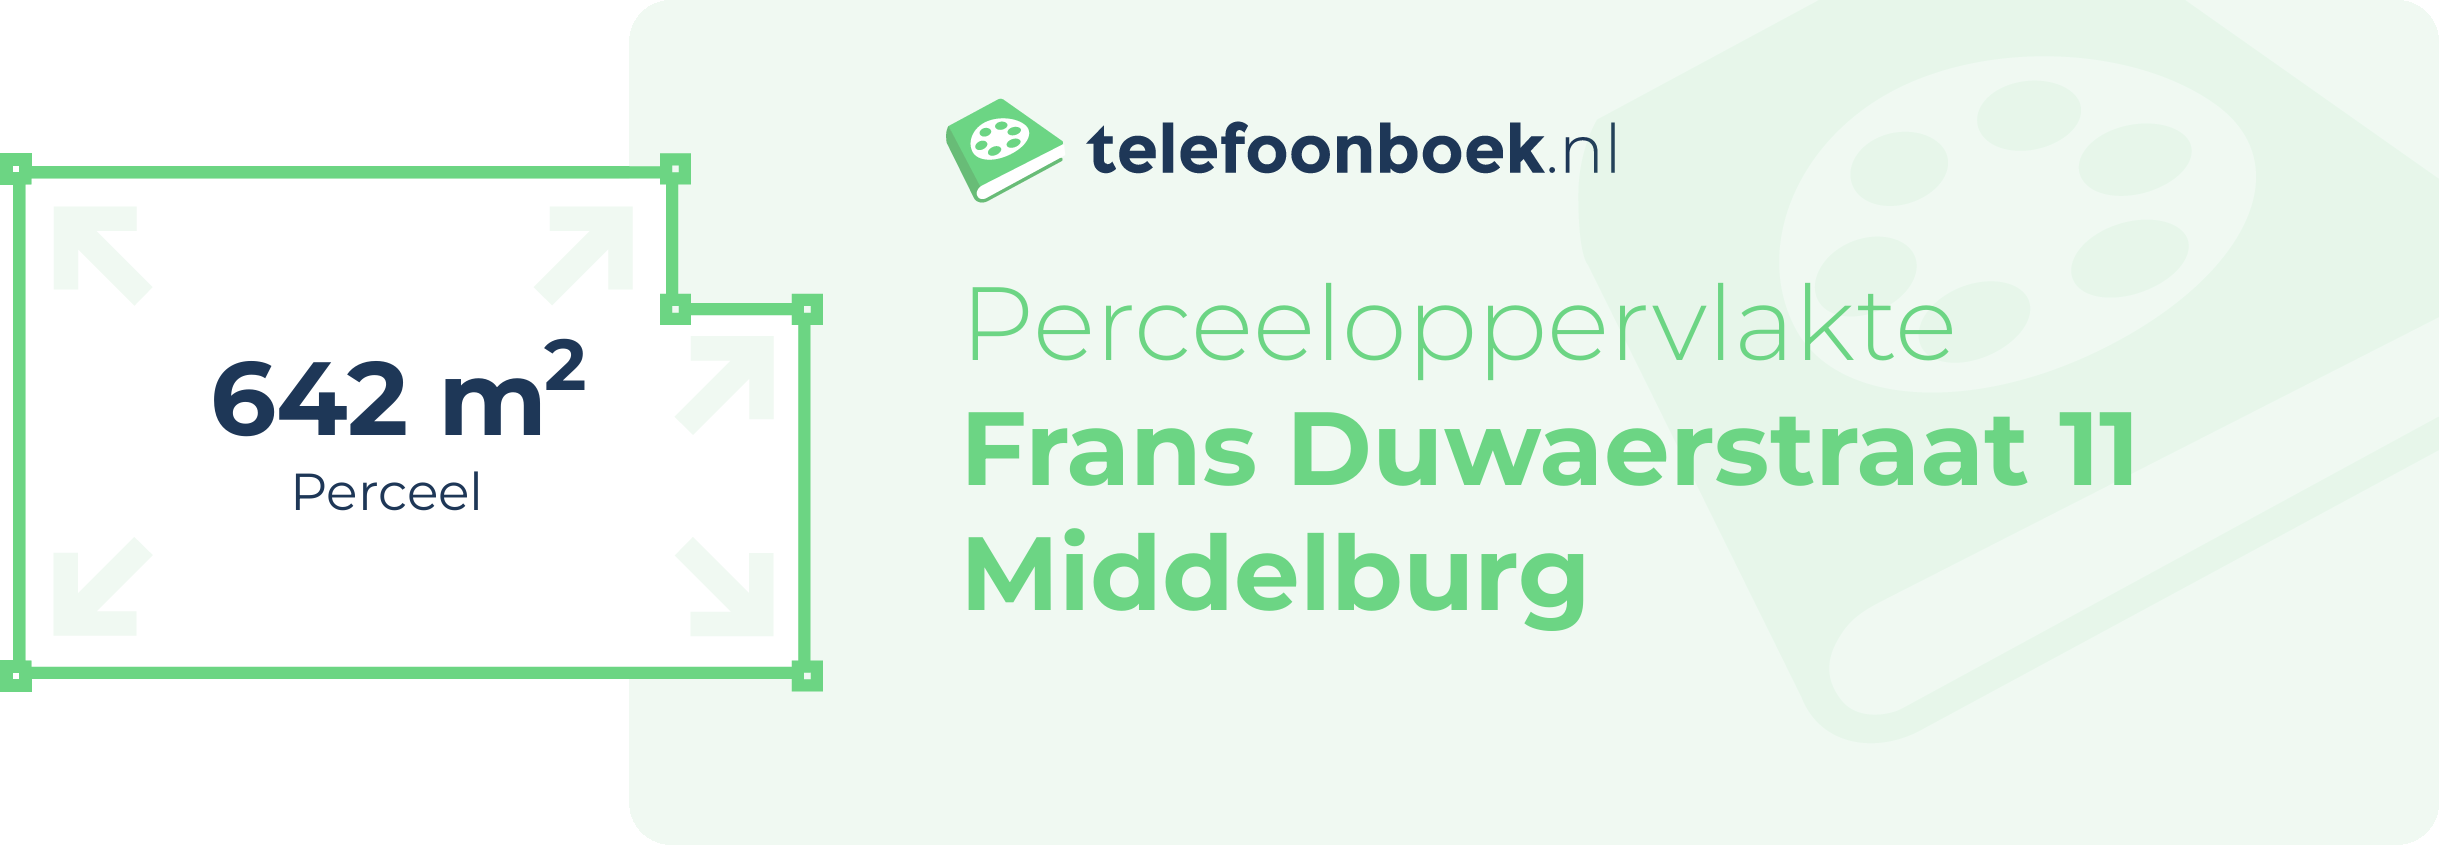 Perceeloppervlakte Frans Duwaerstraat 11 Middelburg